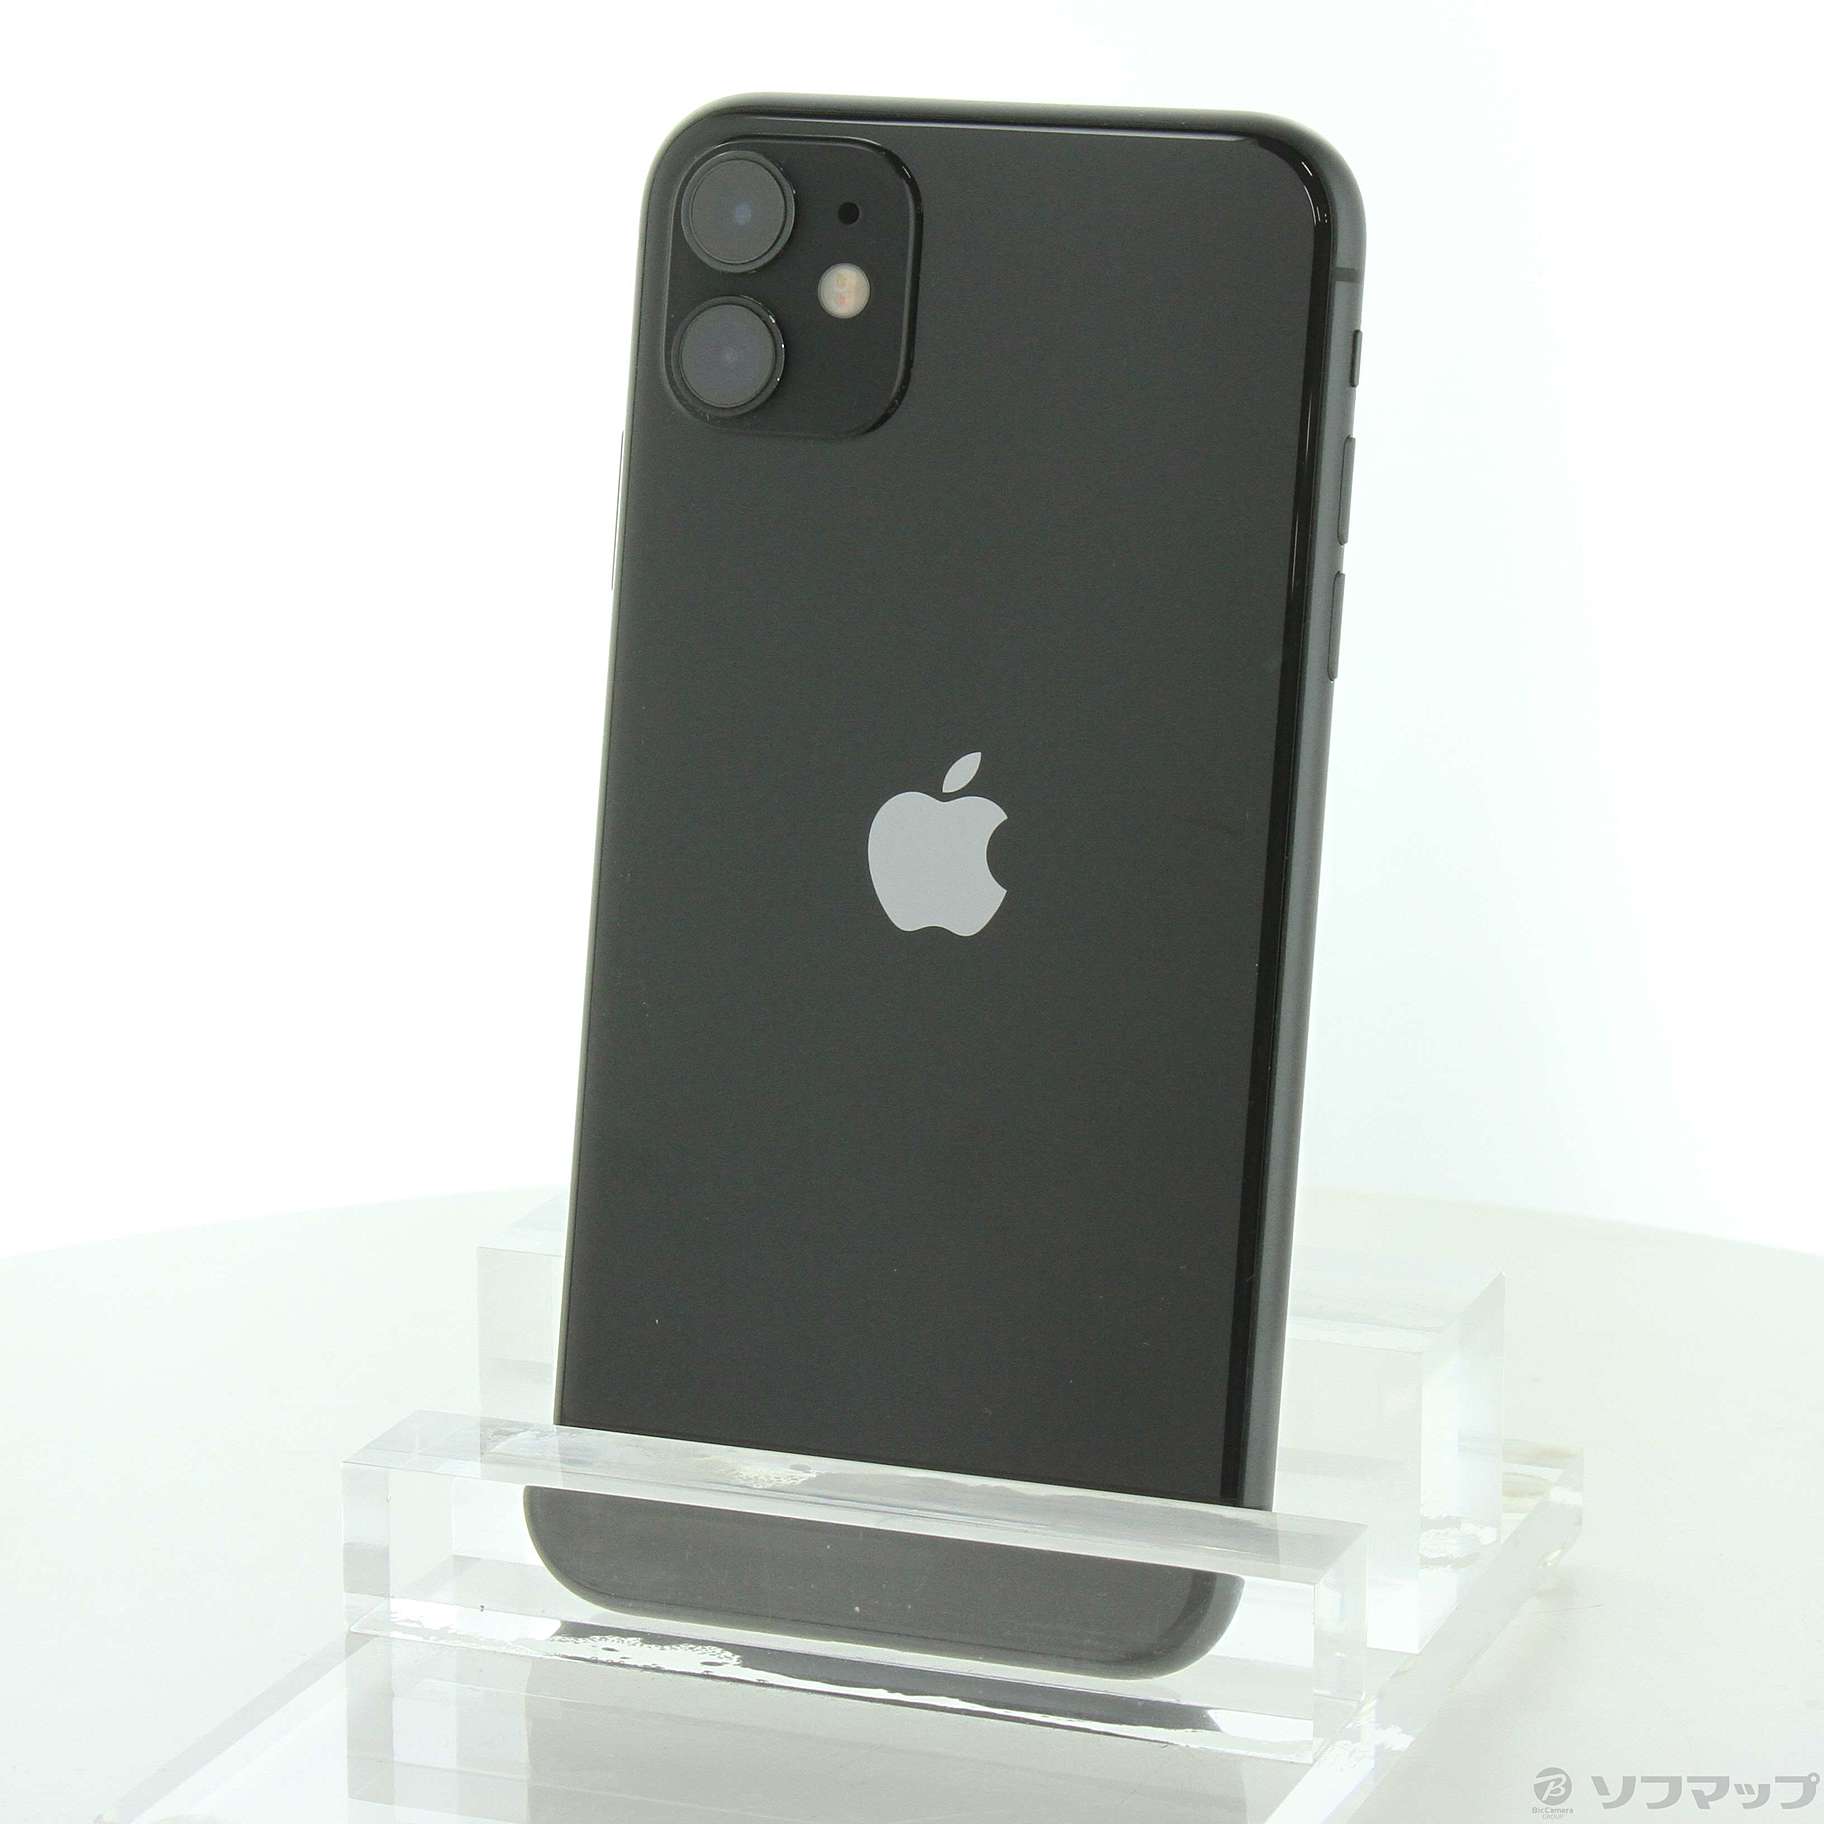 iPhone11 64GB BLACK - スマートフォン本体